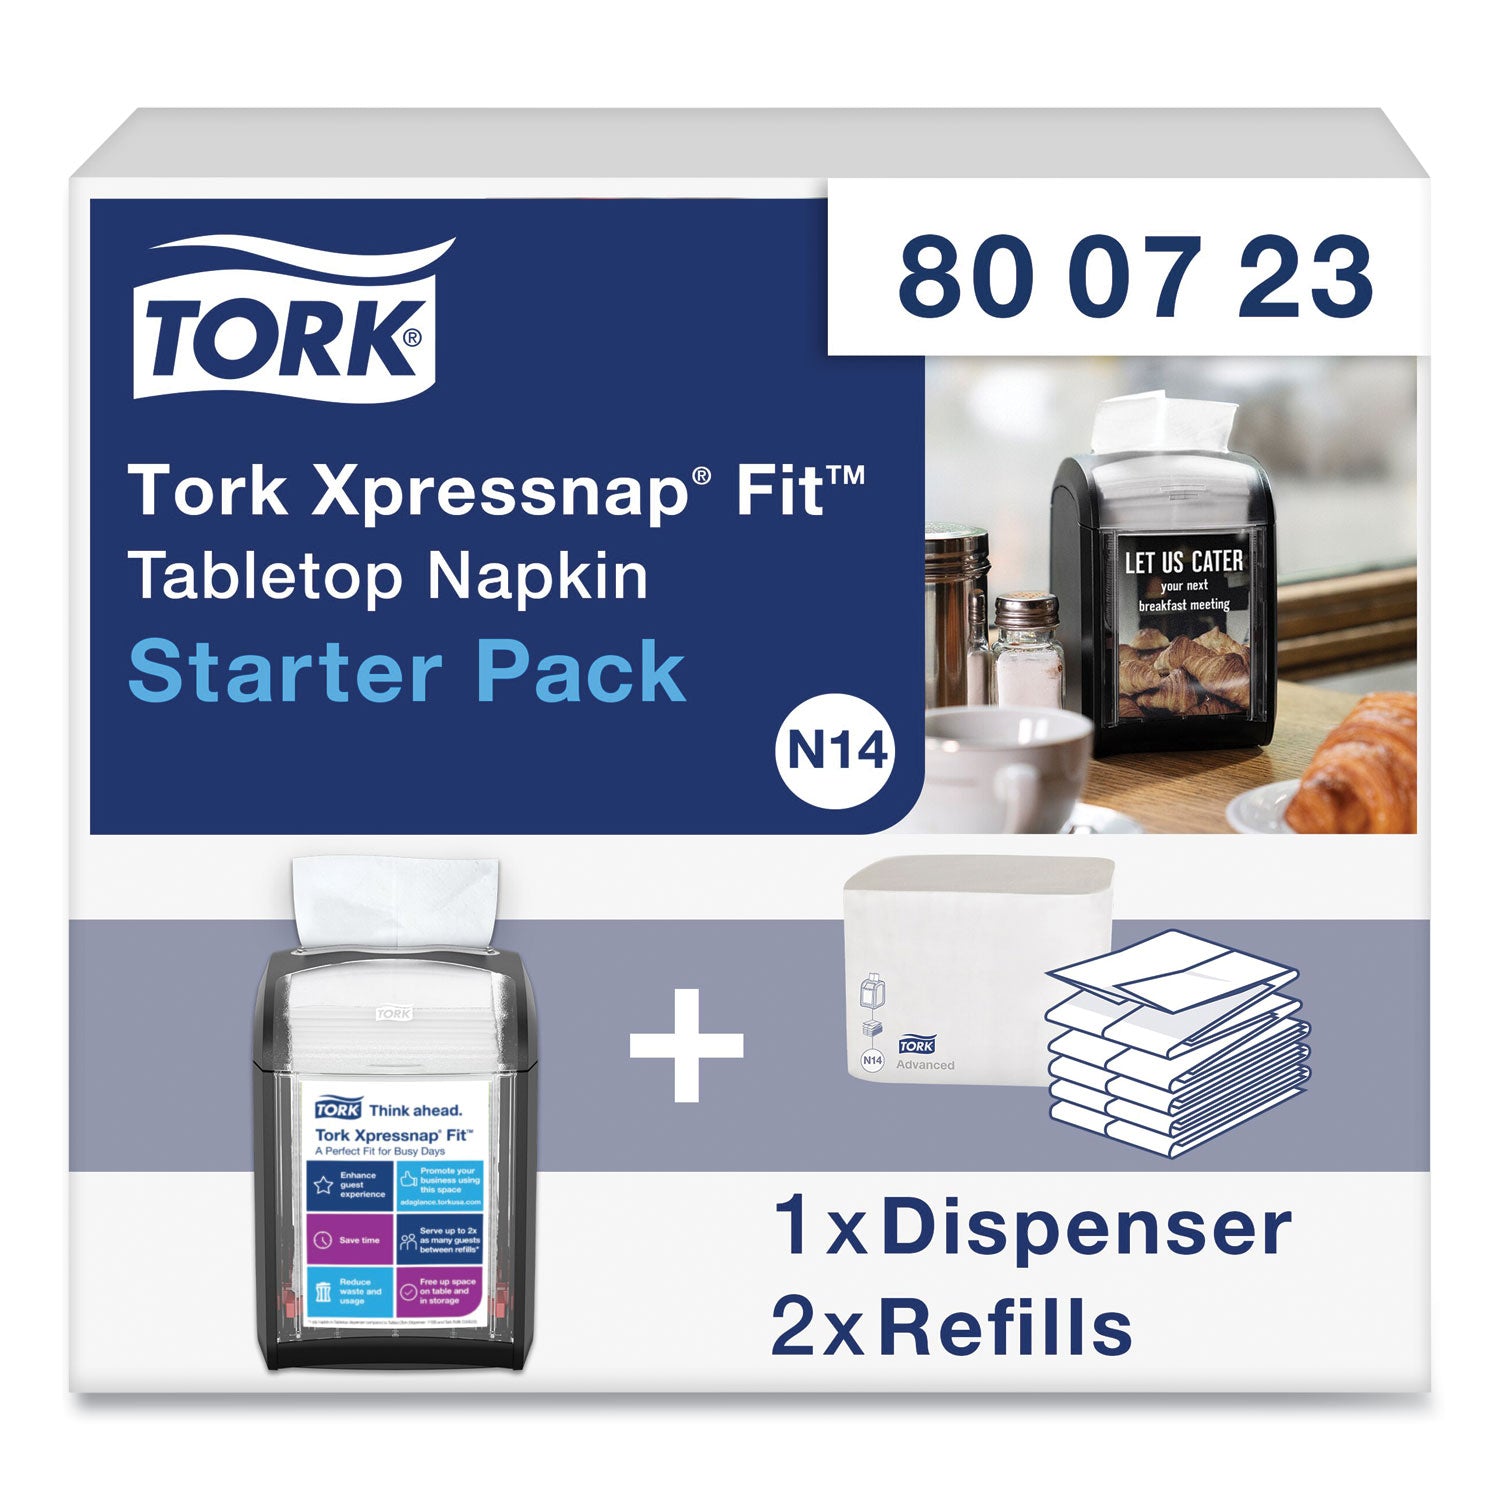 xpressnap-fit-starter-pack-4-x-6-x-7-black_trk800723 - 4